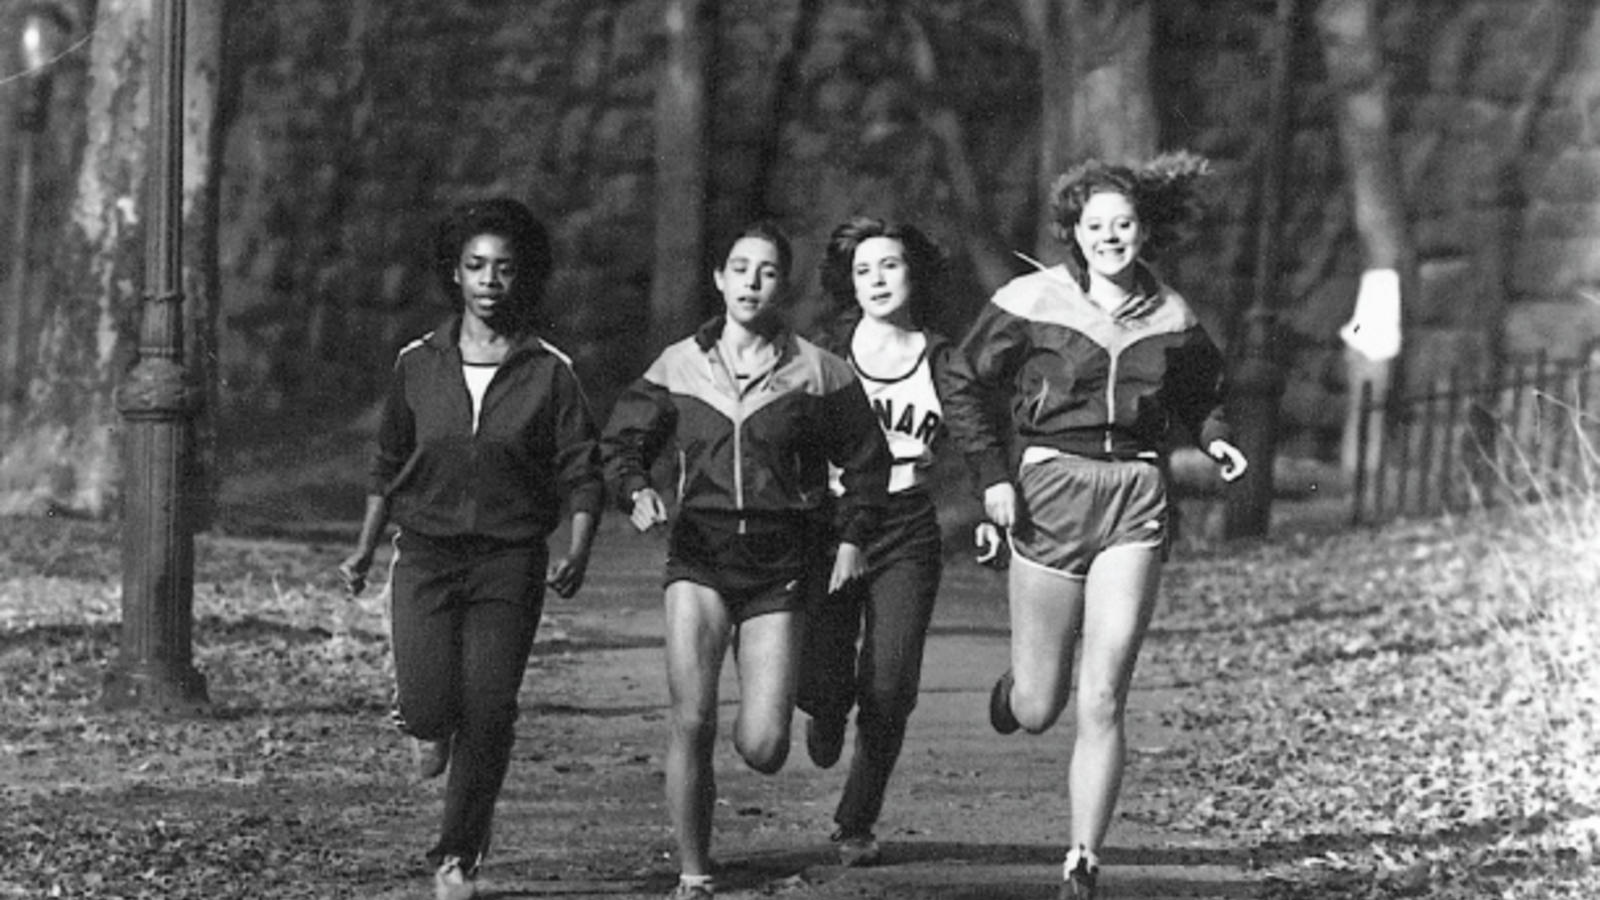 4 women runners circa 1982 running through a park, black and white image